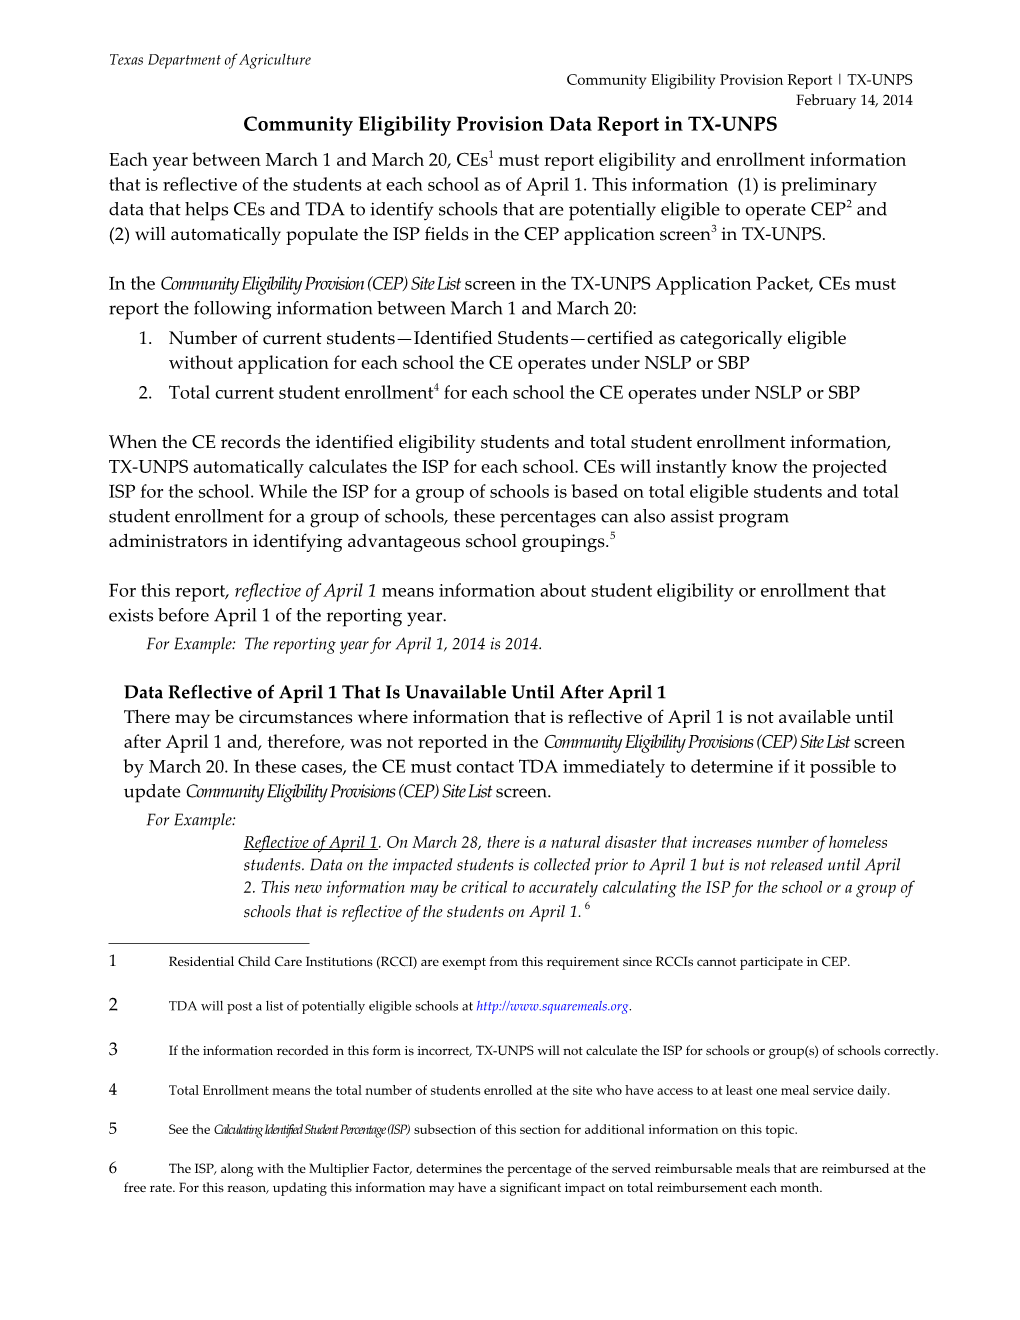 Community Eligibility Provision Data Report in TX-UNPS